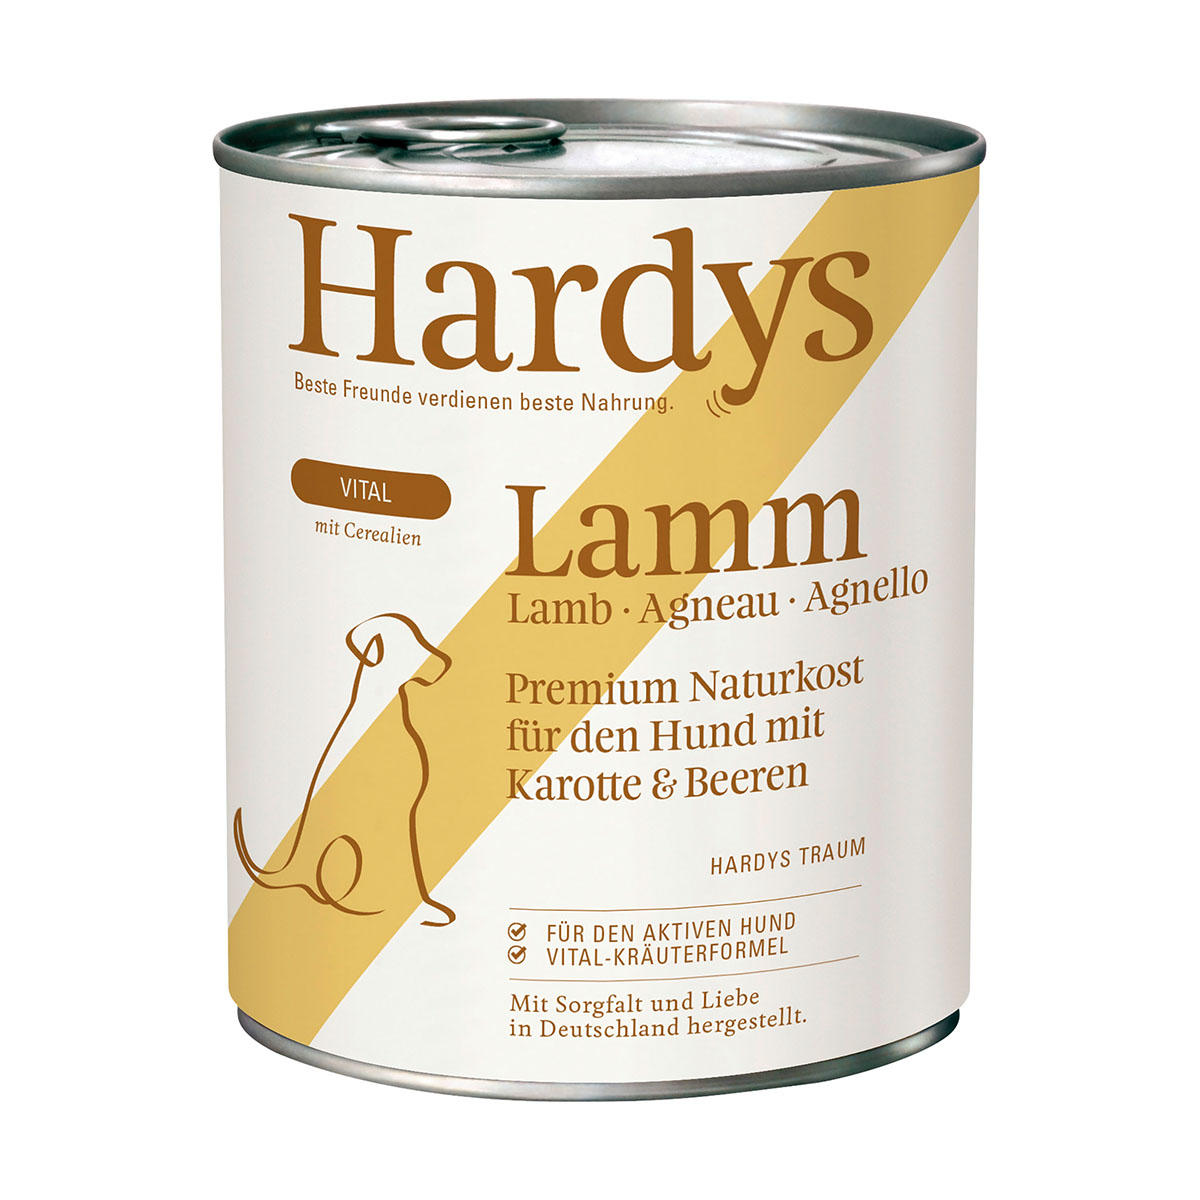 Hardys VITAL Lamm mit Karotte & Beeren 6x800g von Hardys